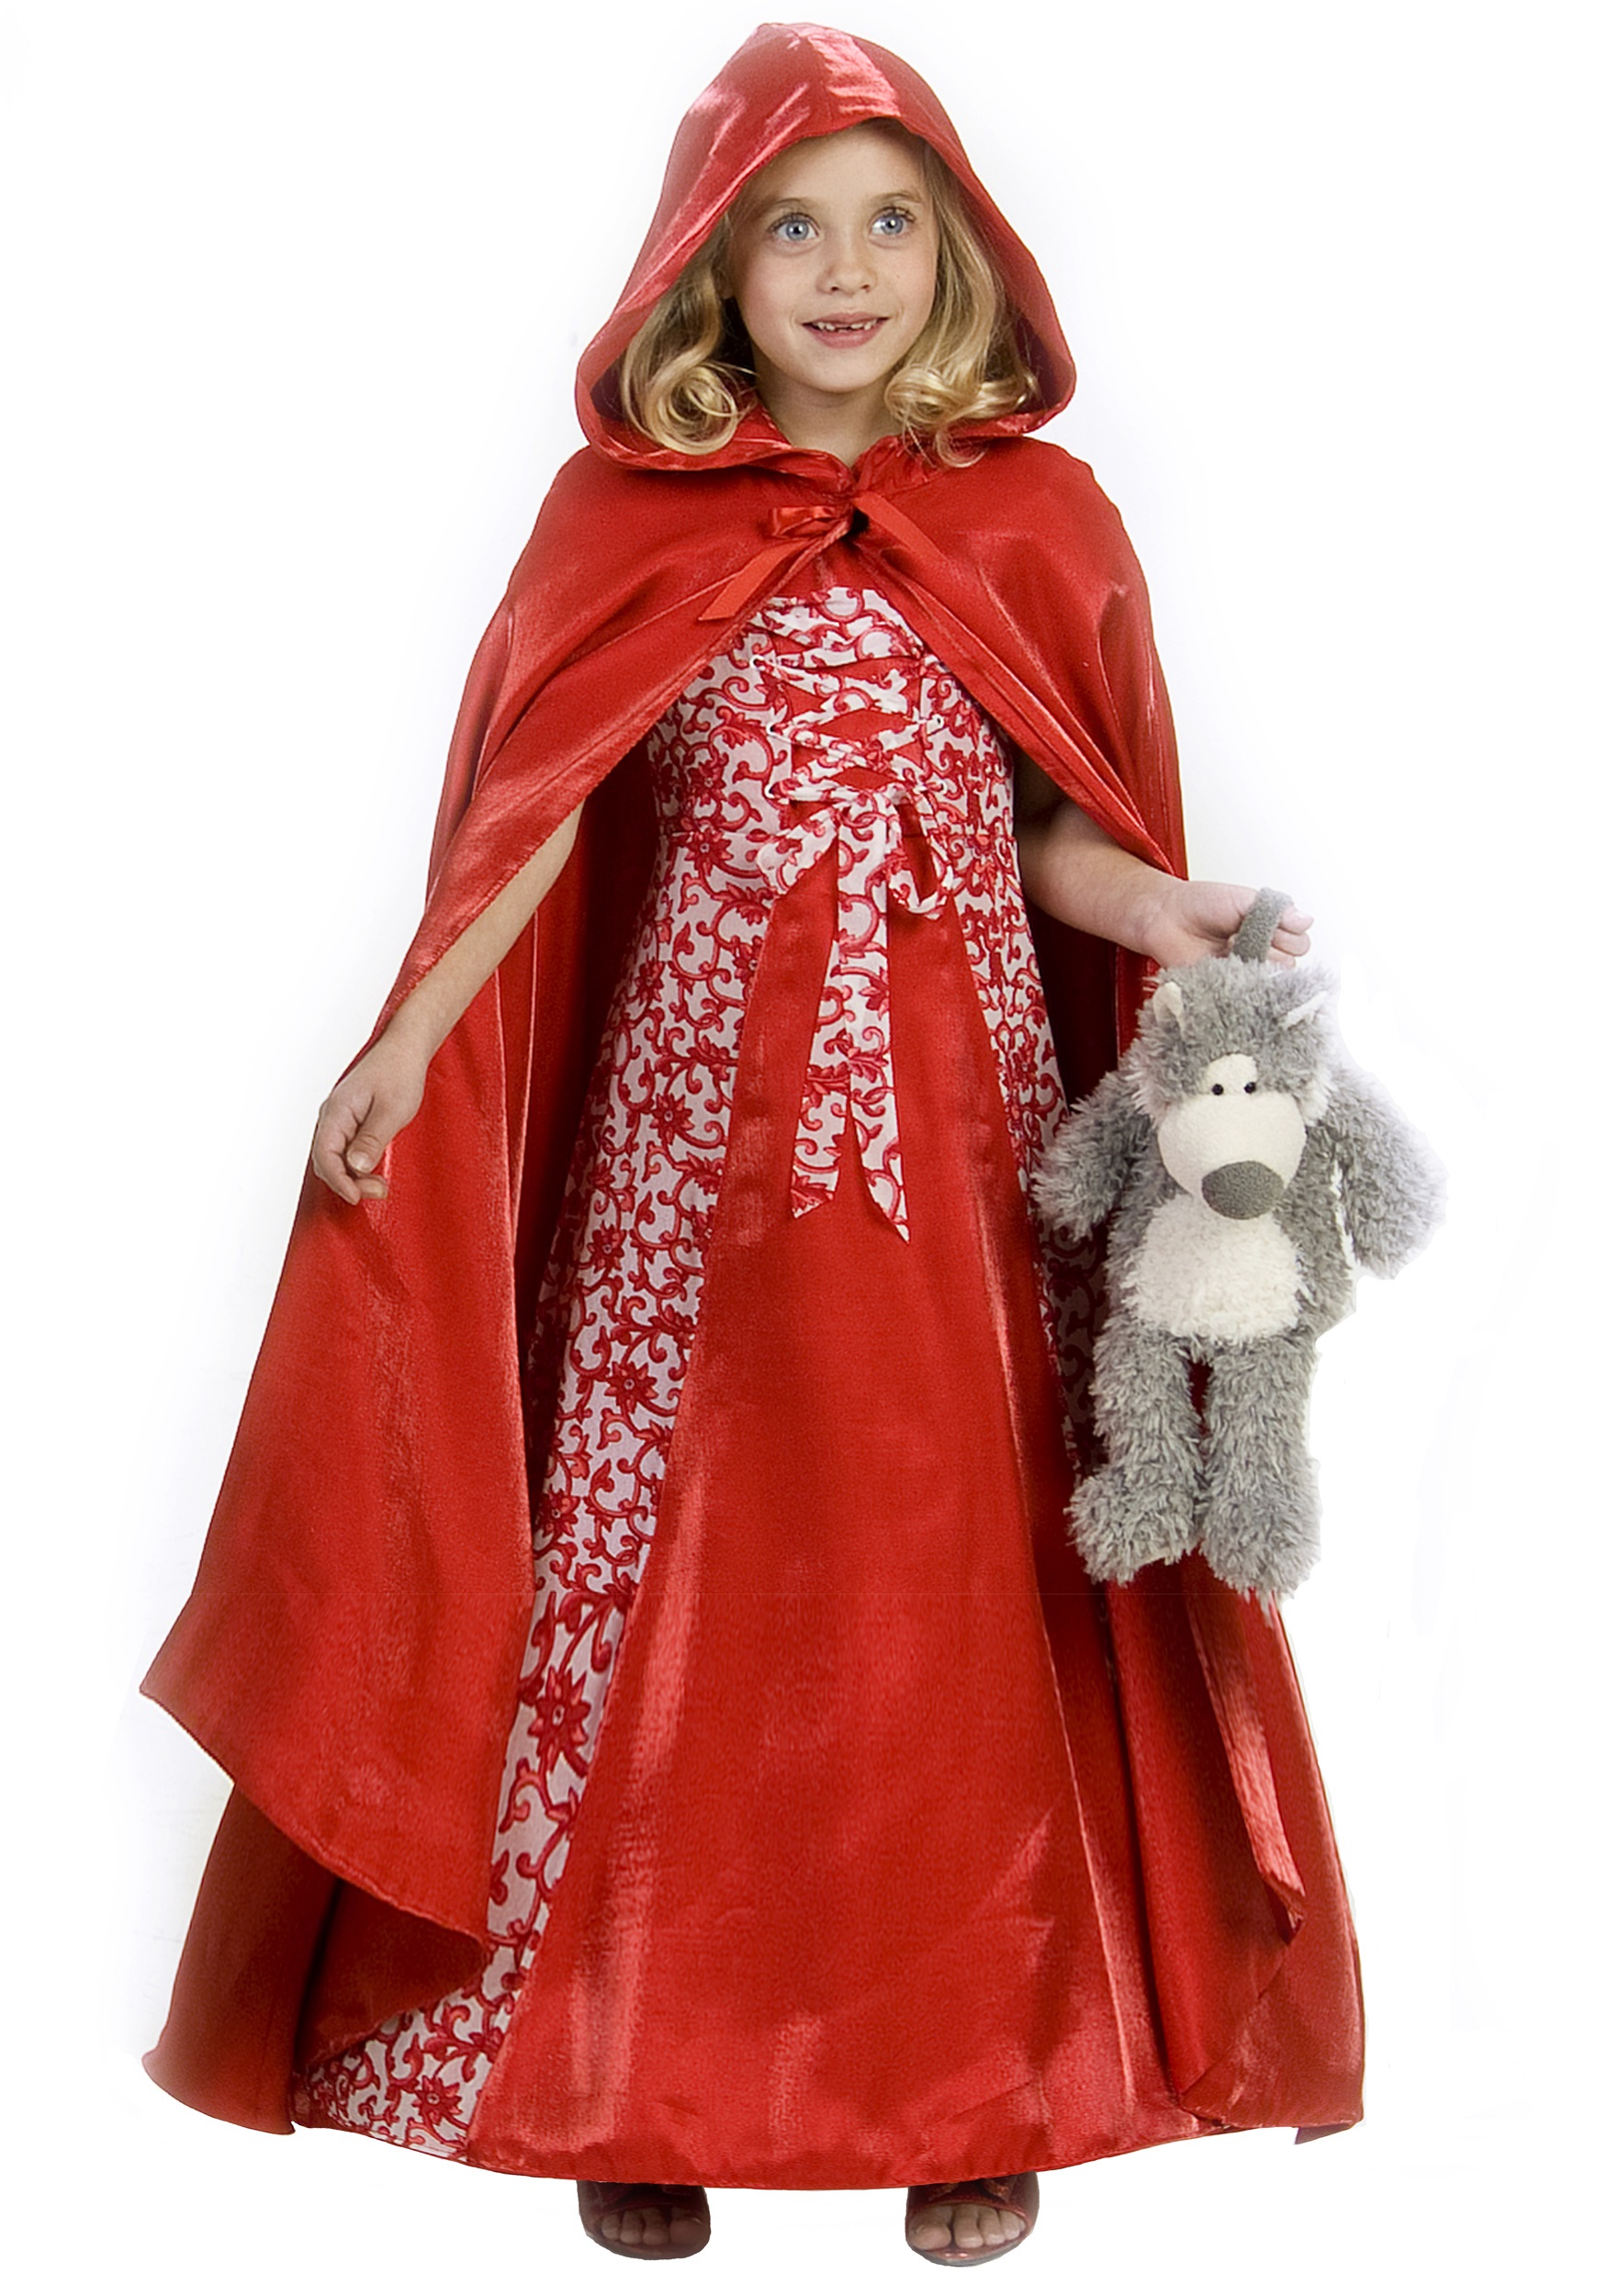 Image of Princess Red Riding Hood Costume ID PR4097-S